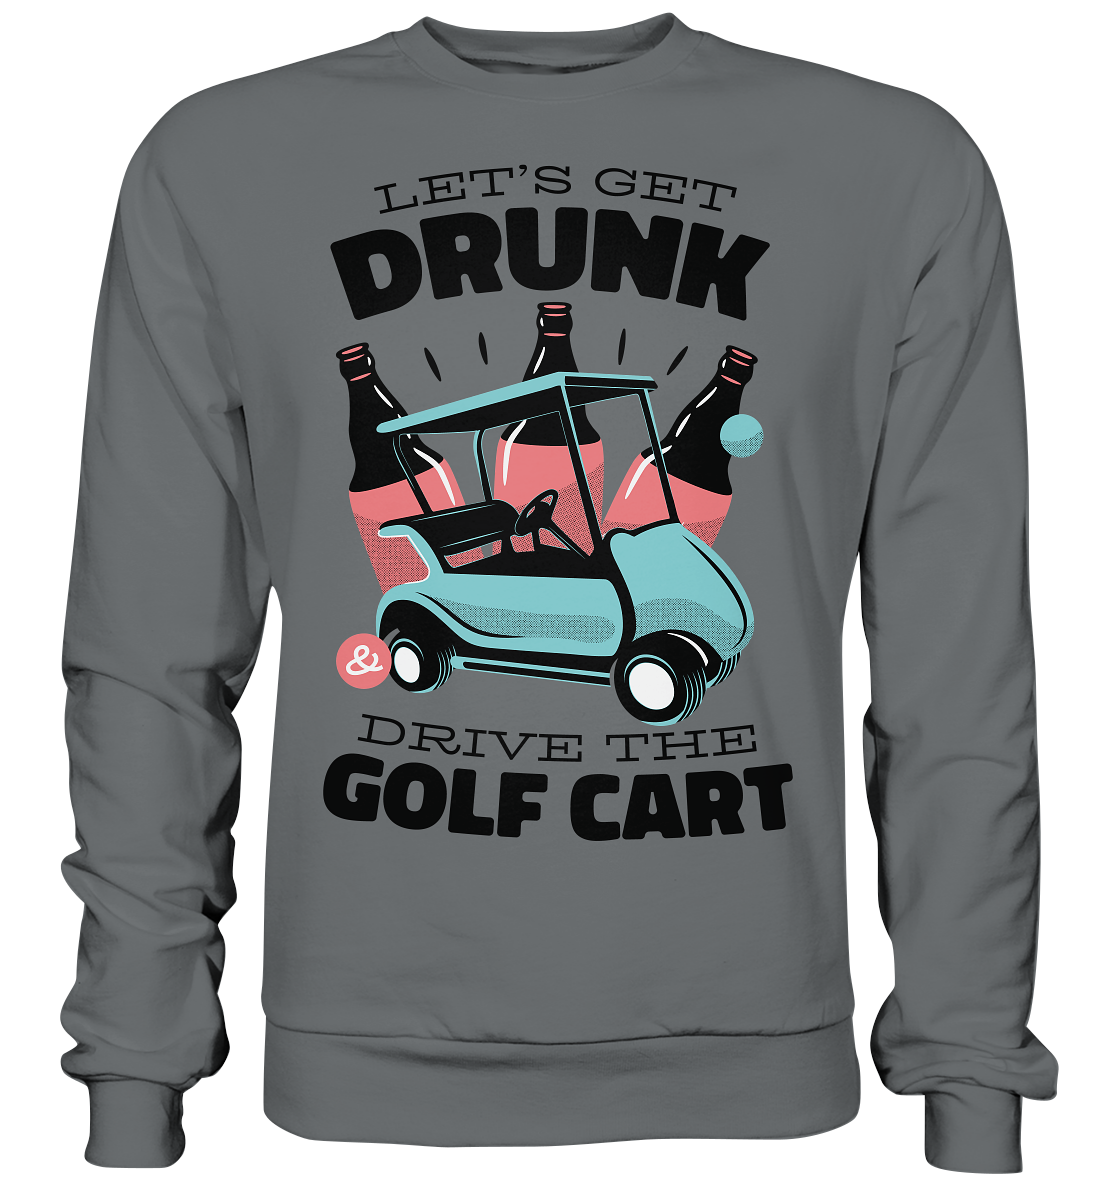 Let's get drunk drive the golf cart - Basic sweatshirt